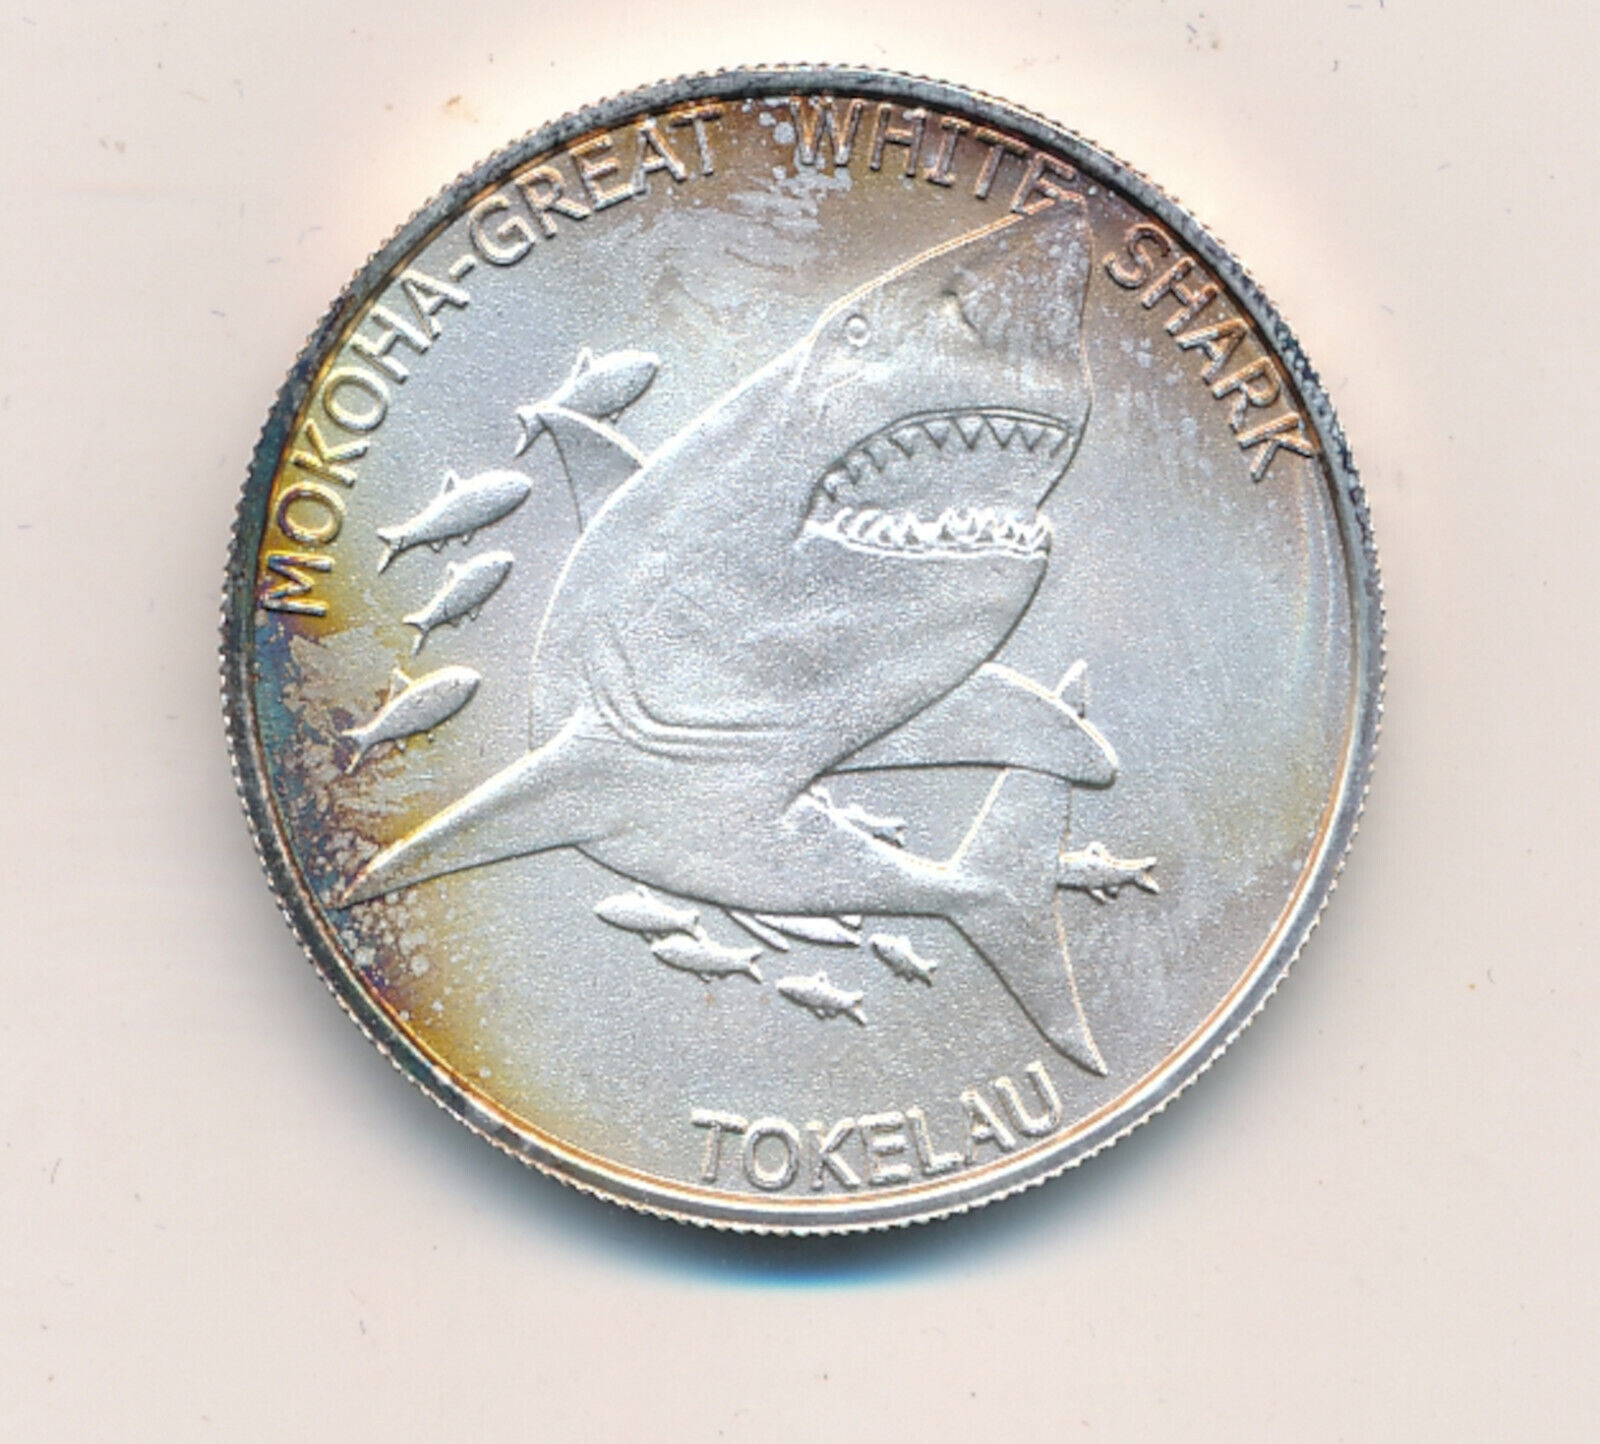 2015 Coin, Tokelau Coin, 1OZ Pure Silver, Great White Shark, Toning Arround Rim